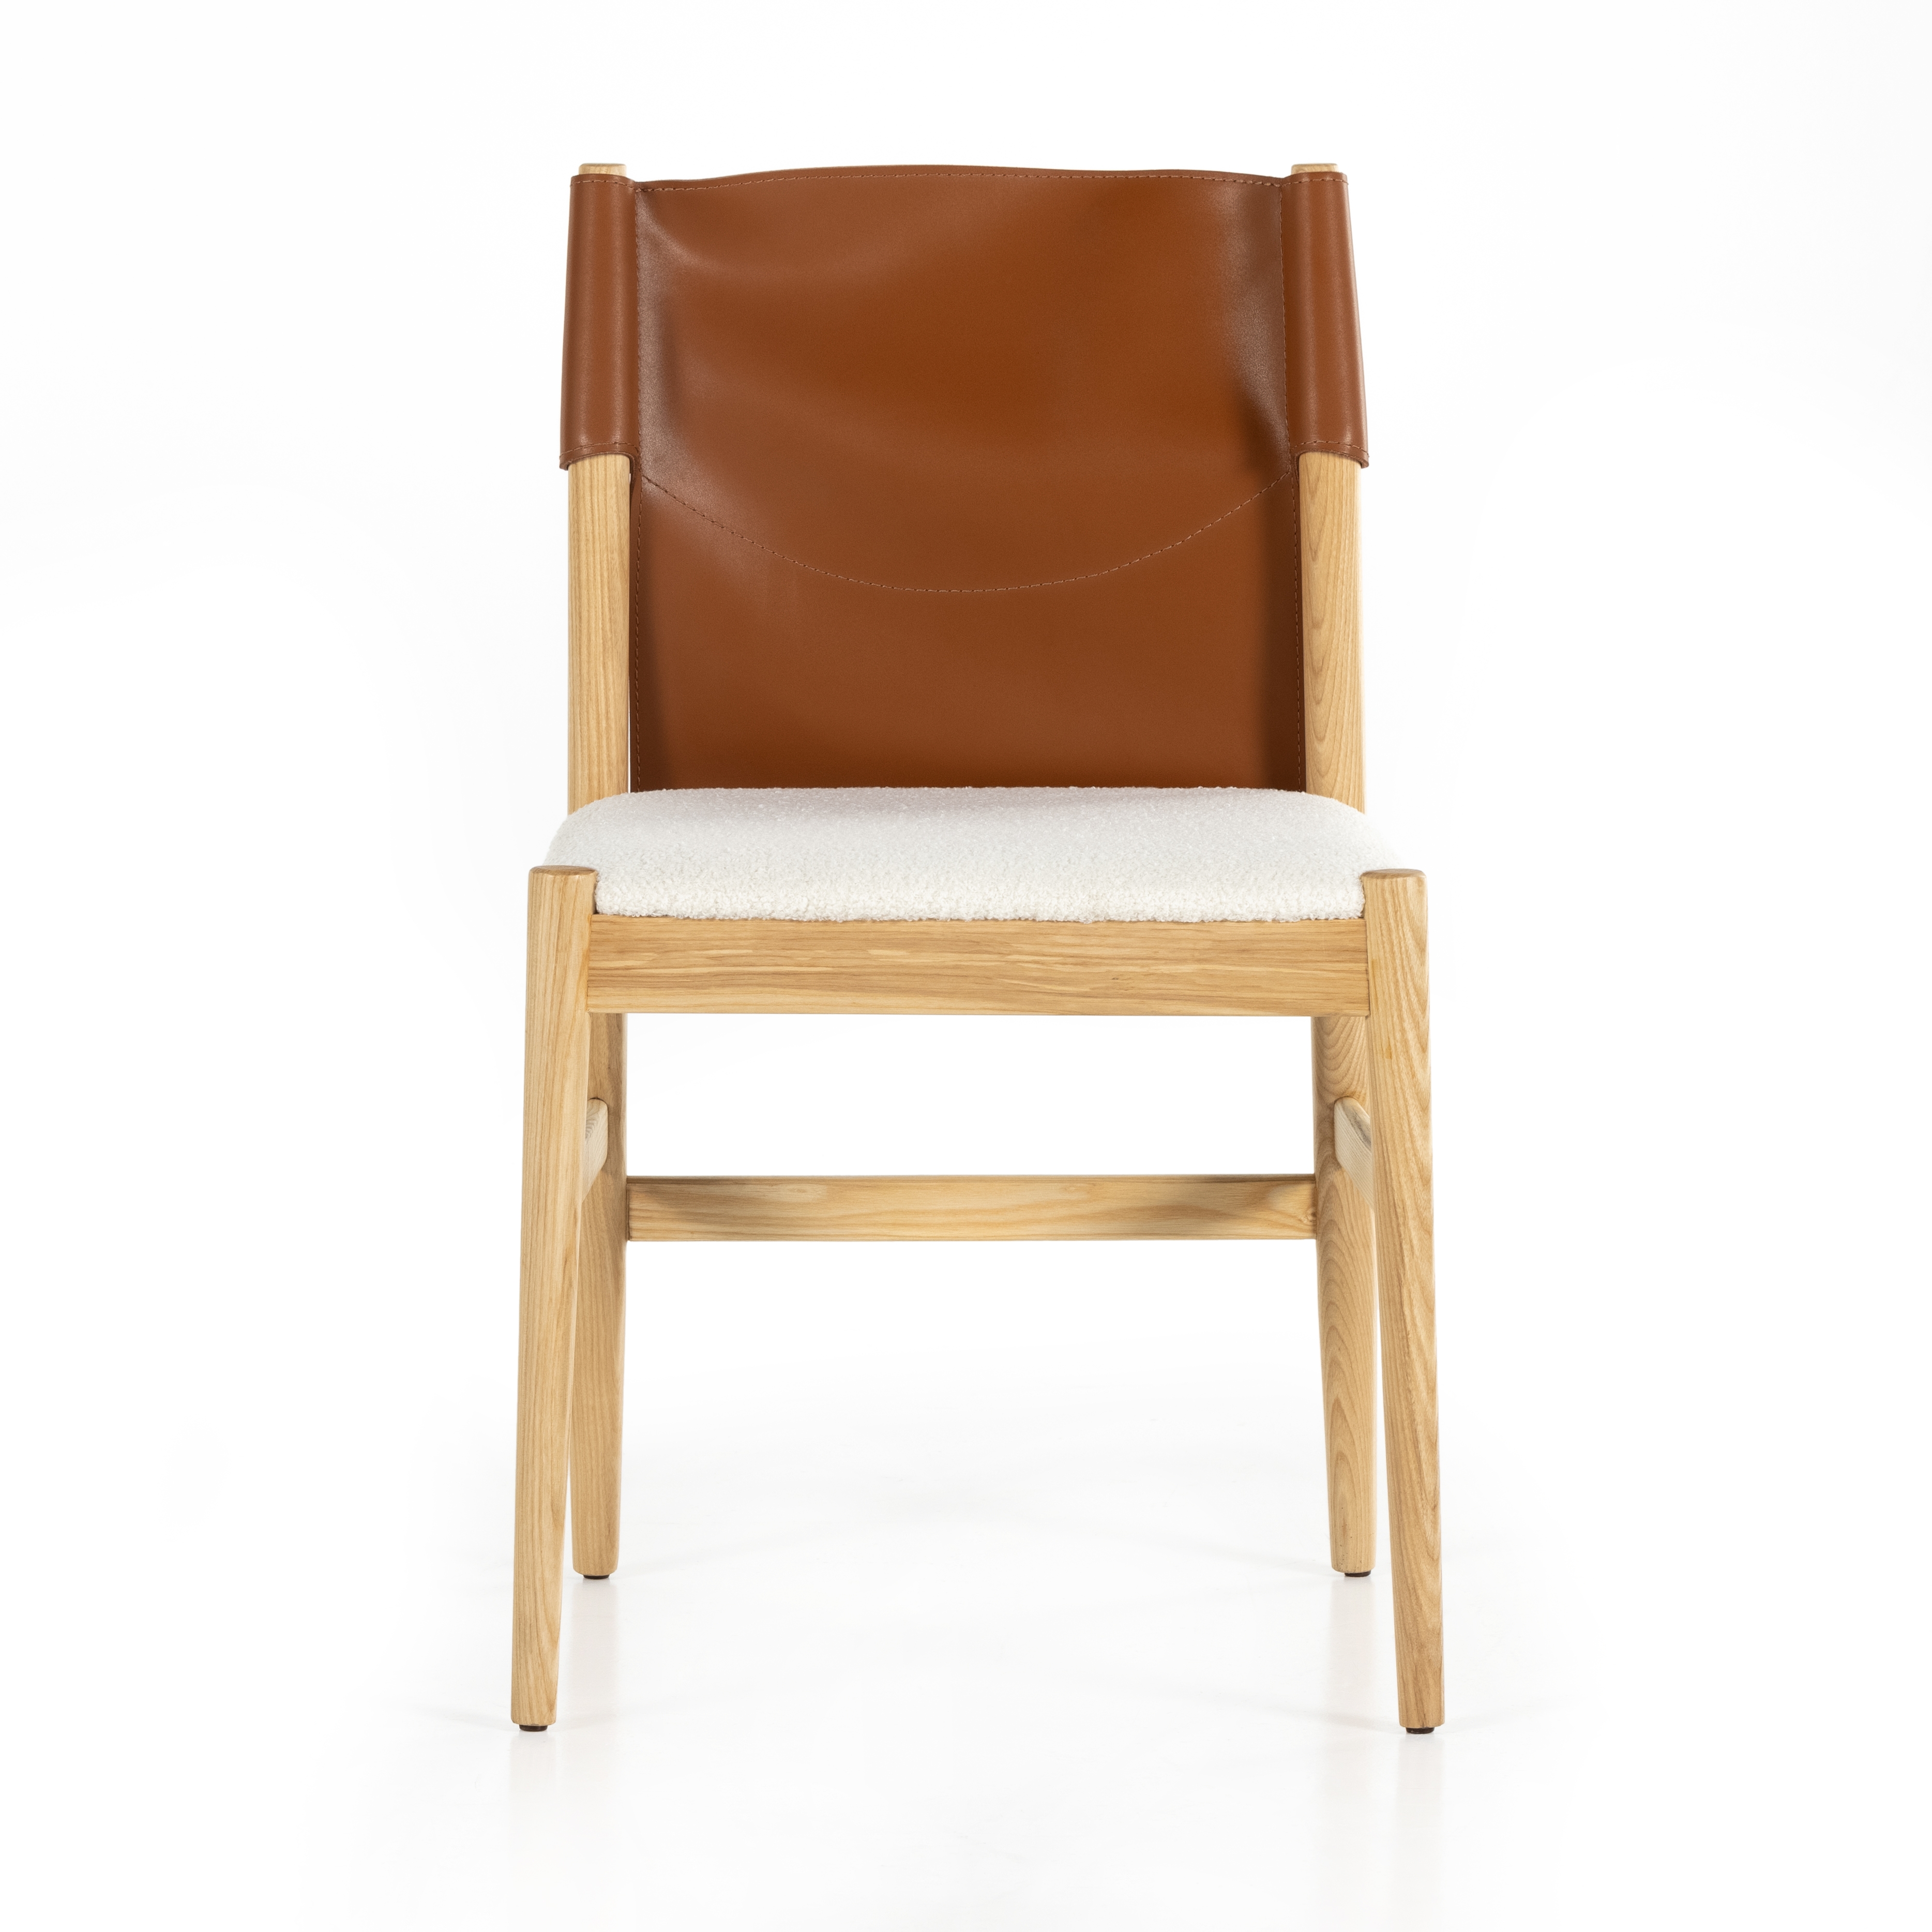 Lulu Armless Dining Chair-Saddle Leather - Image 3